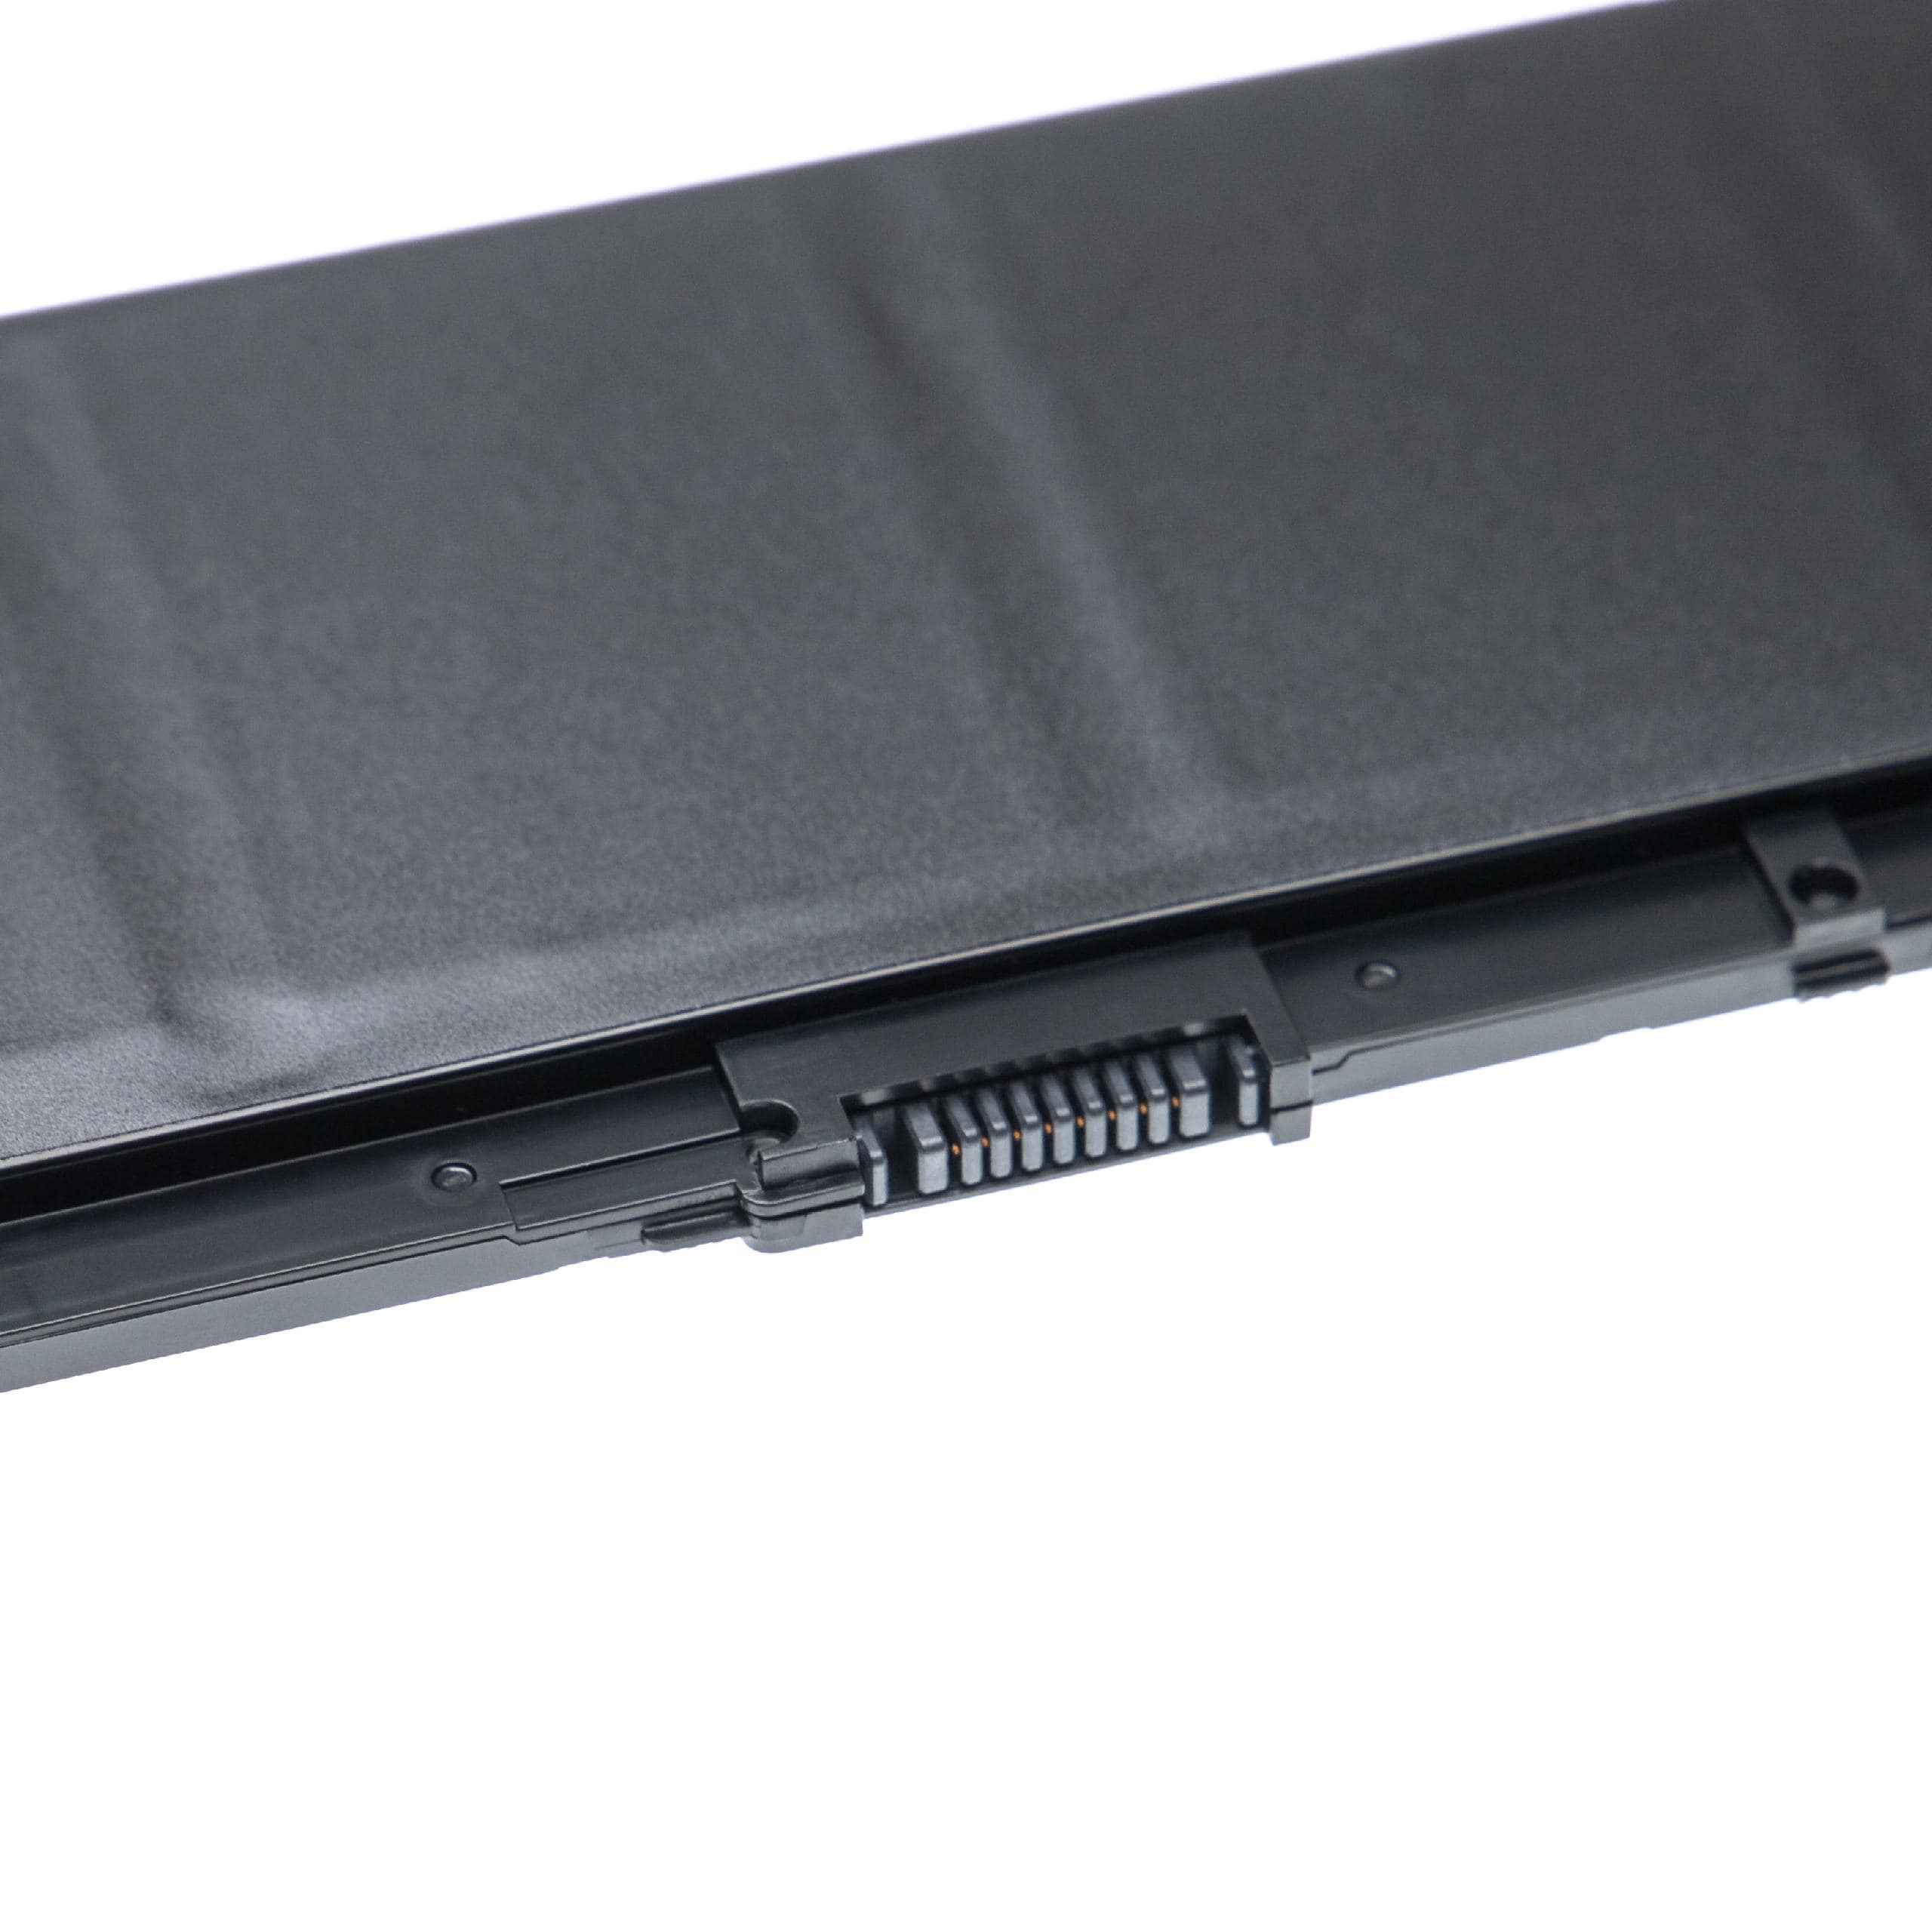 Akumulator do laptopa zamiennik HP 917678-1B1, 916678-171, 917678-271 - 4400 mAh 15,4 V LiPo, czarny